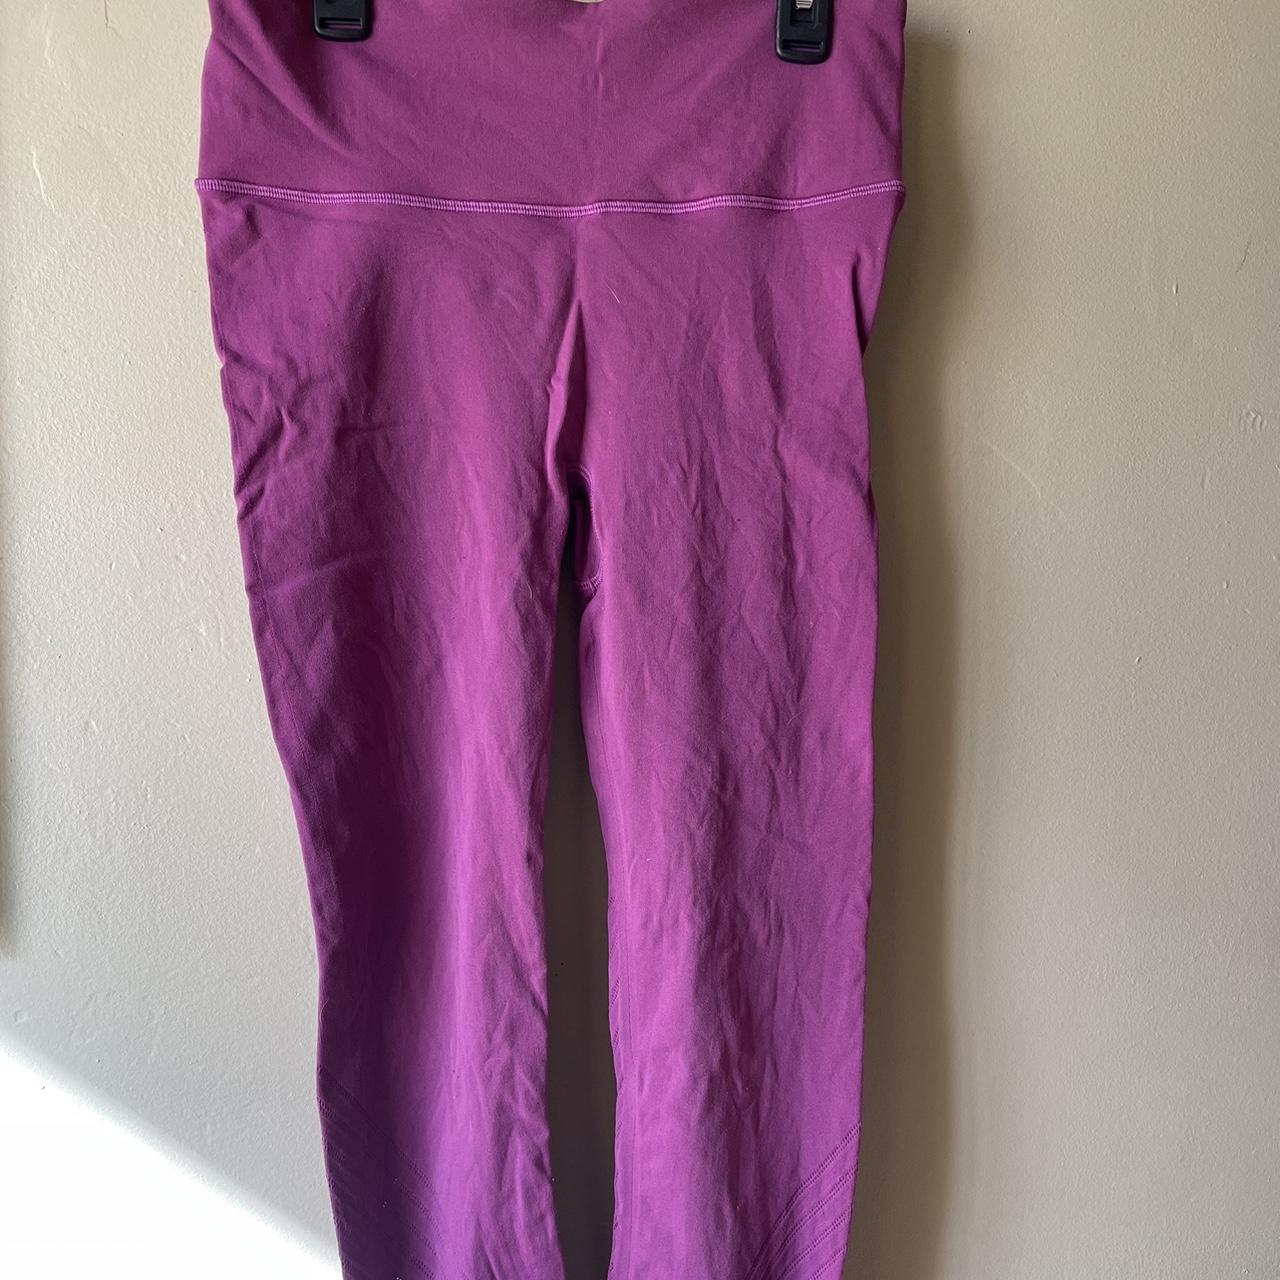 Vintage Lululemon leggings 25 magenta colored